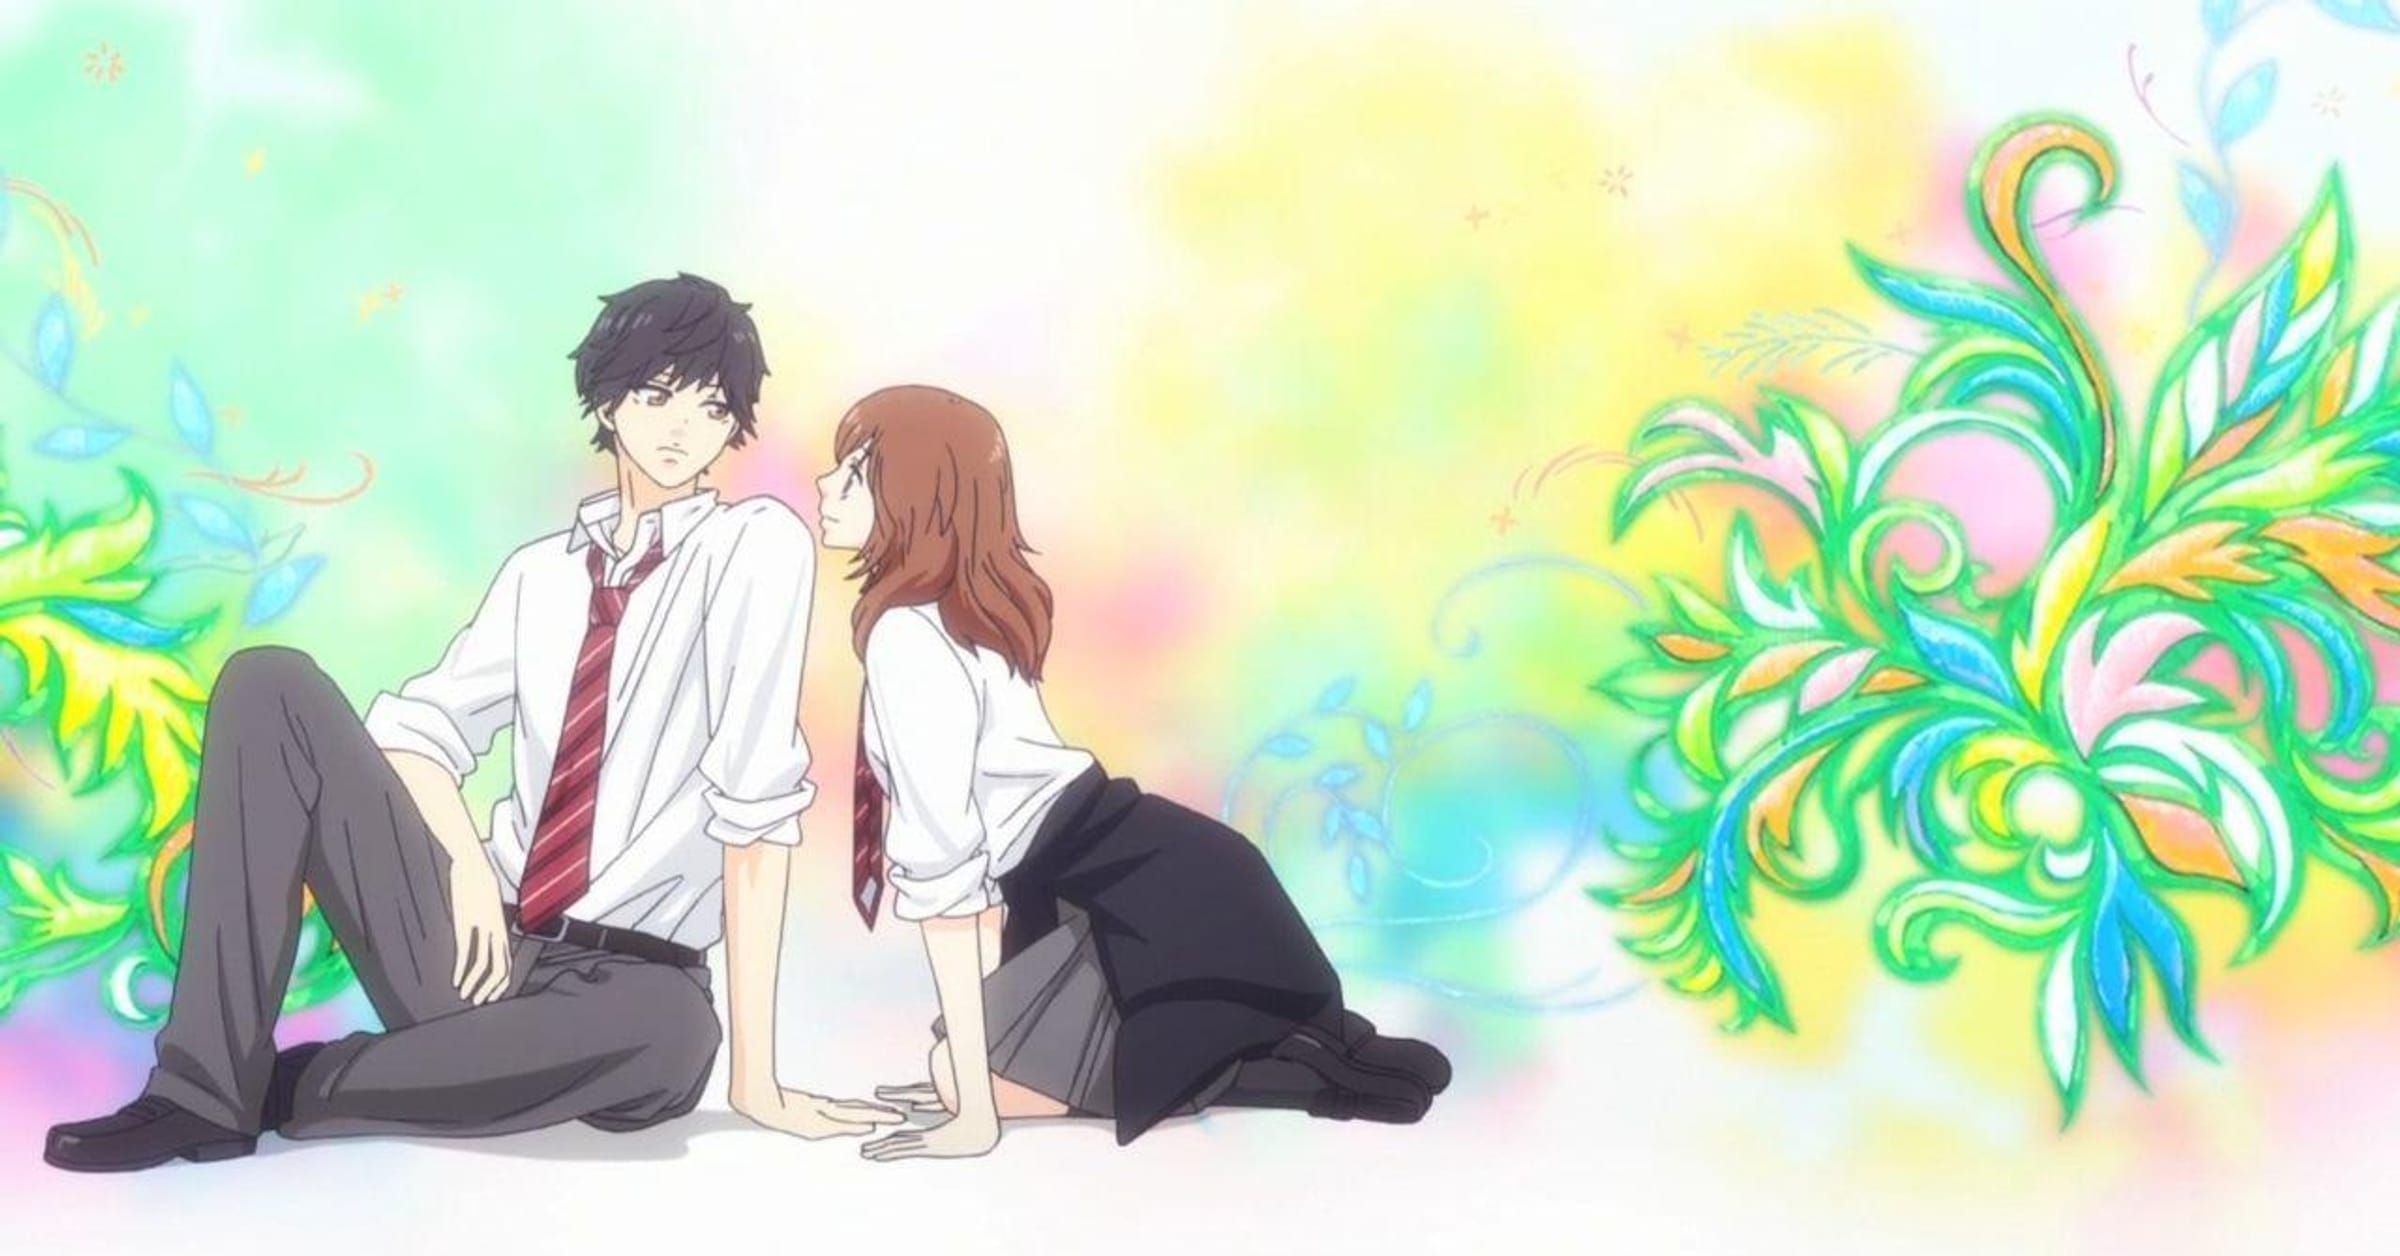 Best Anime on Hulu: 25 Top Anime Series Streaming Now